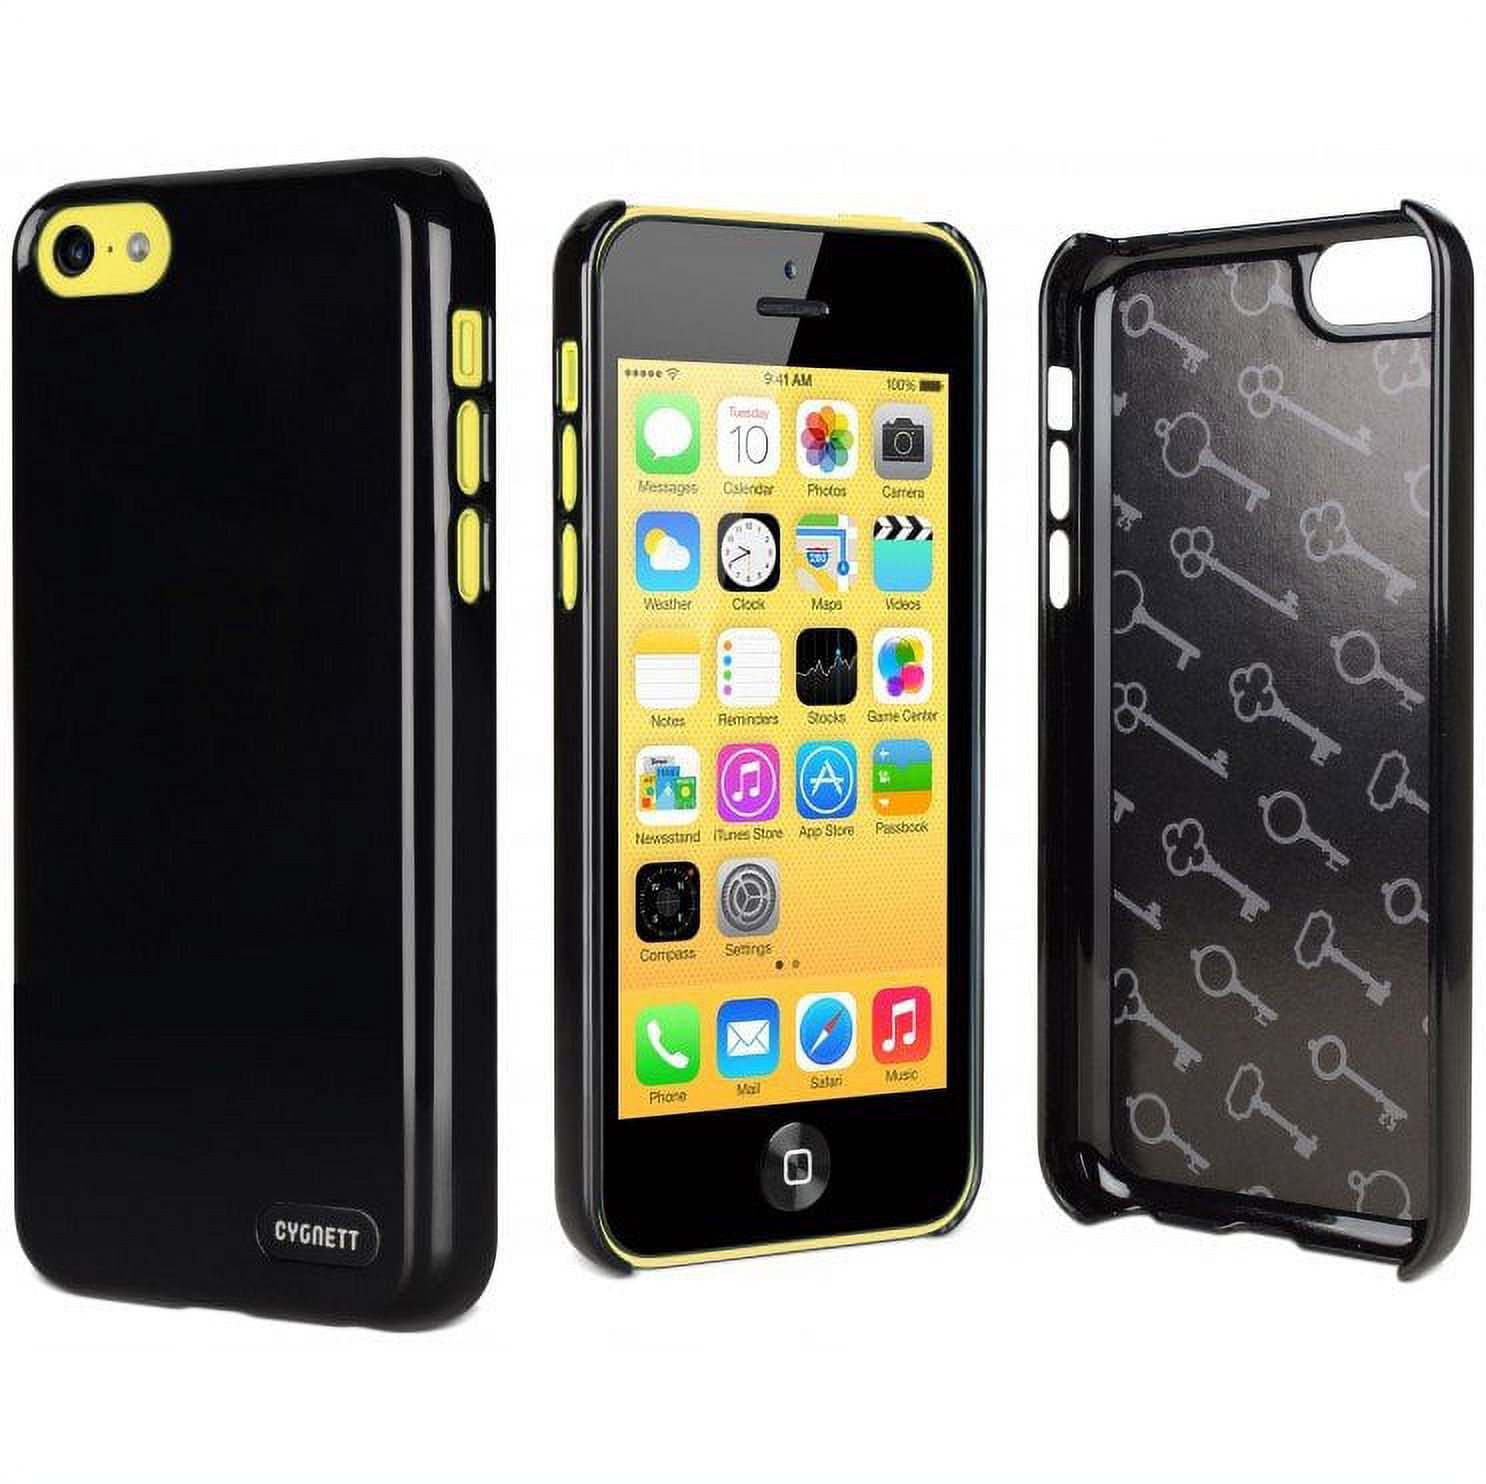 Cygnett Black Form Hard Plastic case iPhone 5C - image 2 of 2